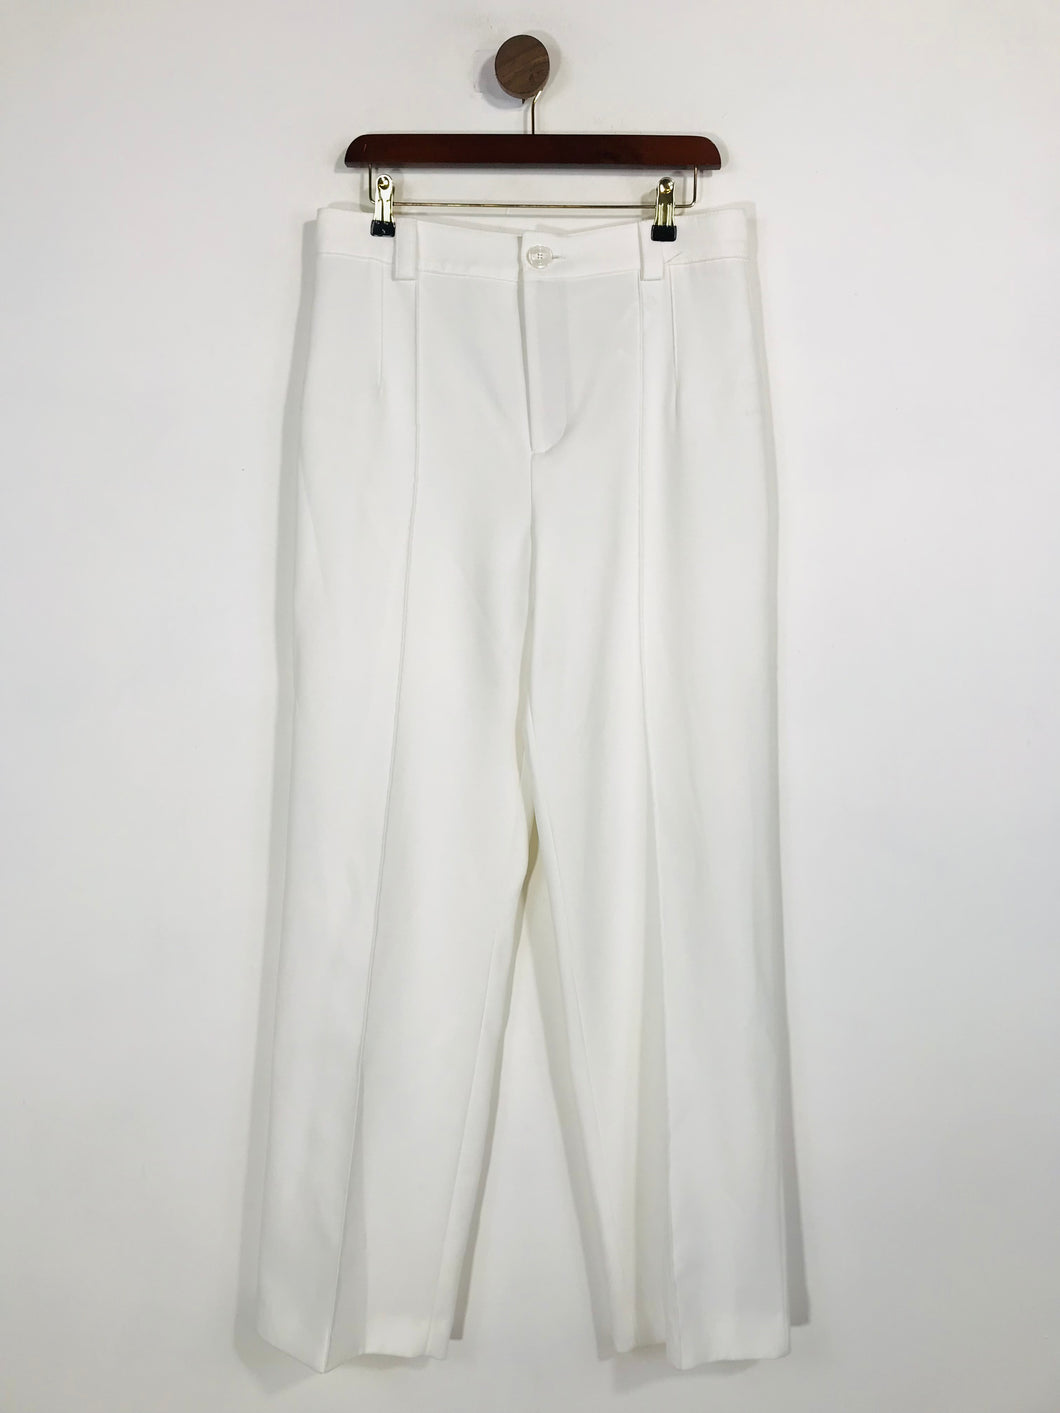 Zara Women's Striped High Waist Casual Trousers | L UK14 | White